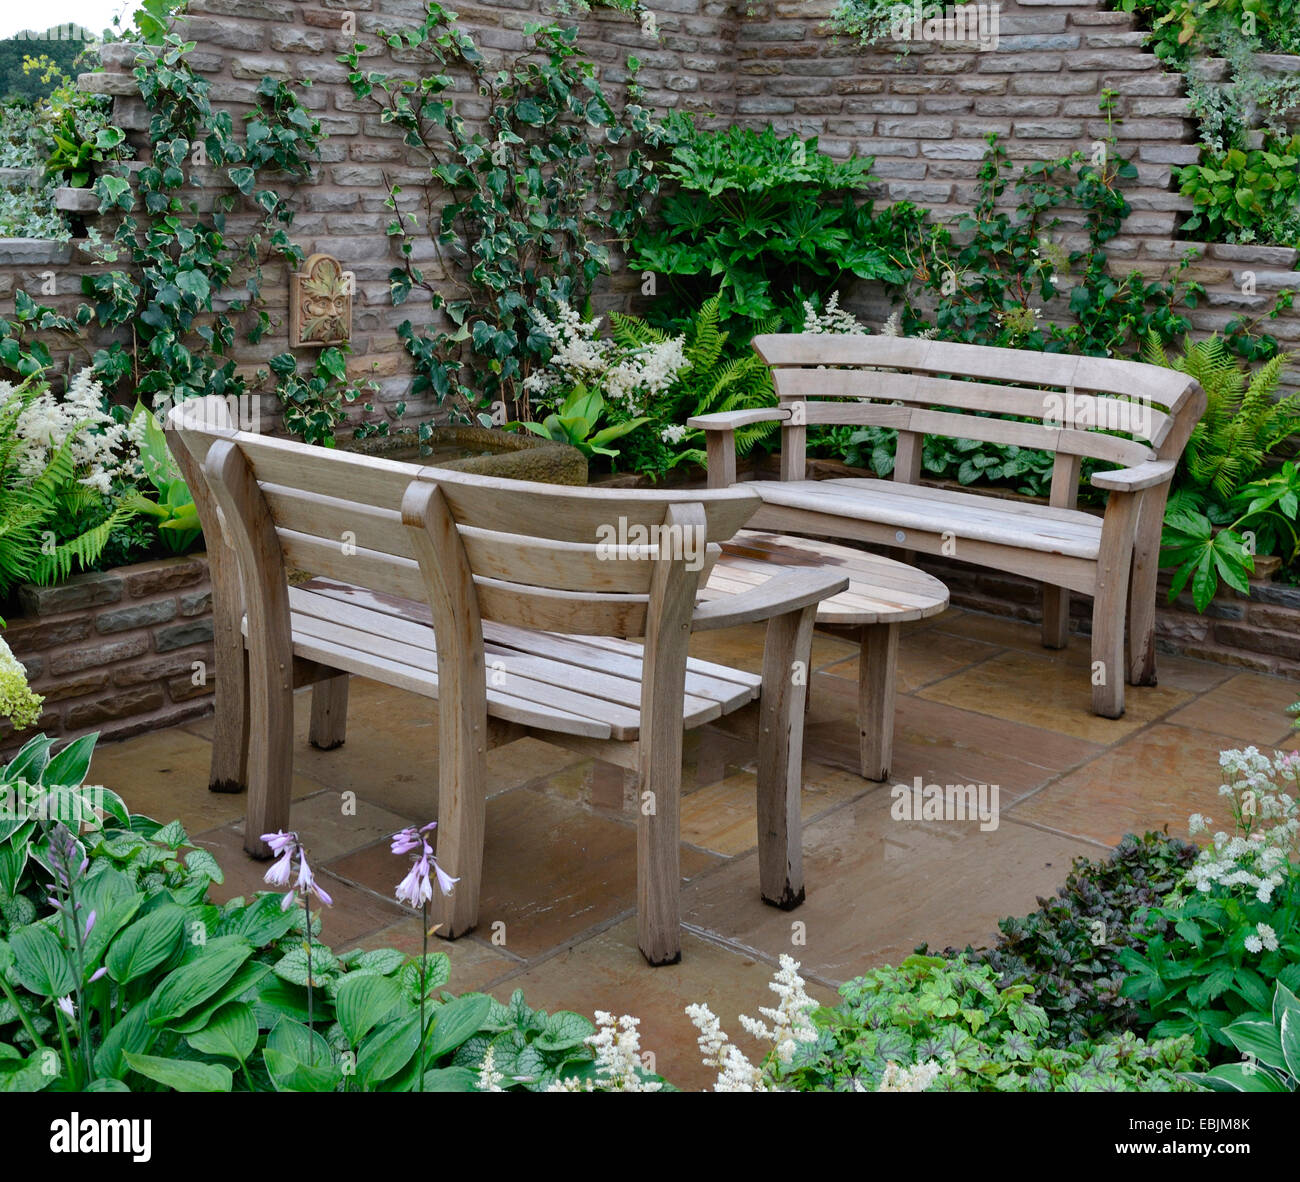 Close up of a wooden garden seats in a walled garden patio Stock Photo